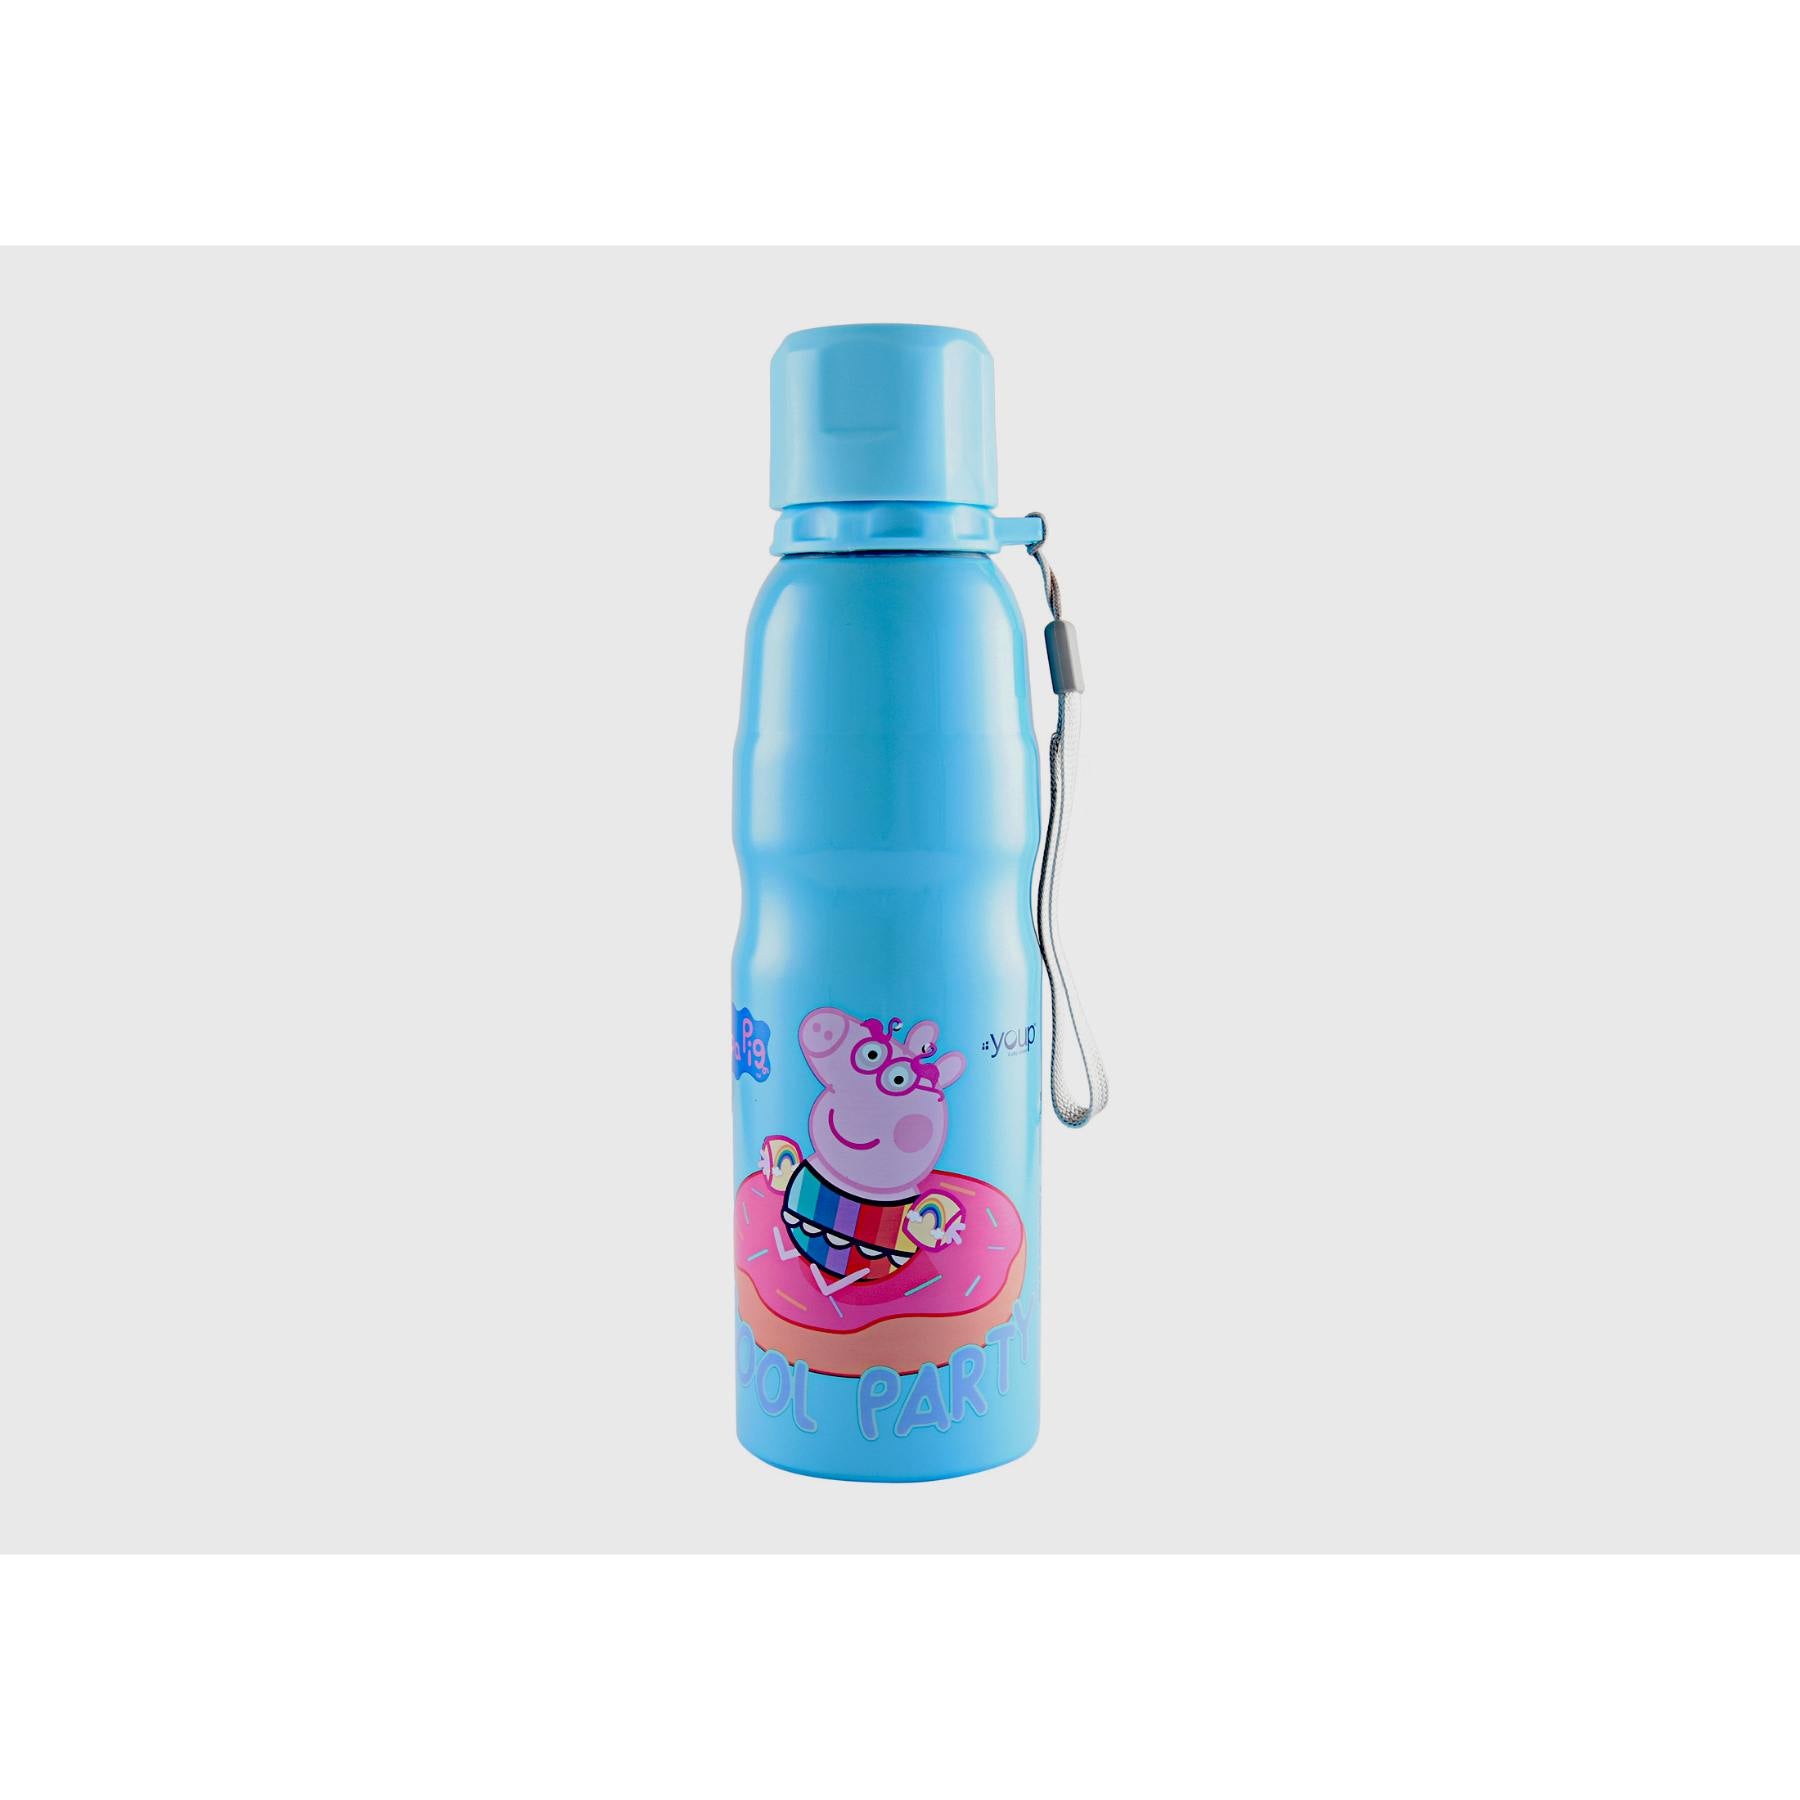 Youp Stainless Steel Blue Color Peppa Pig Kids Water Bottle HARPER  - 750 Ml